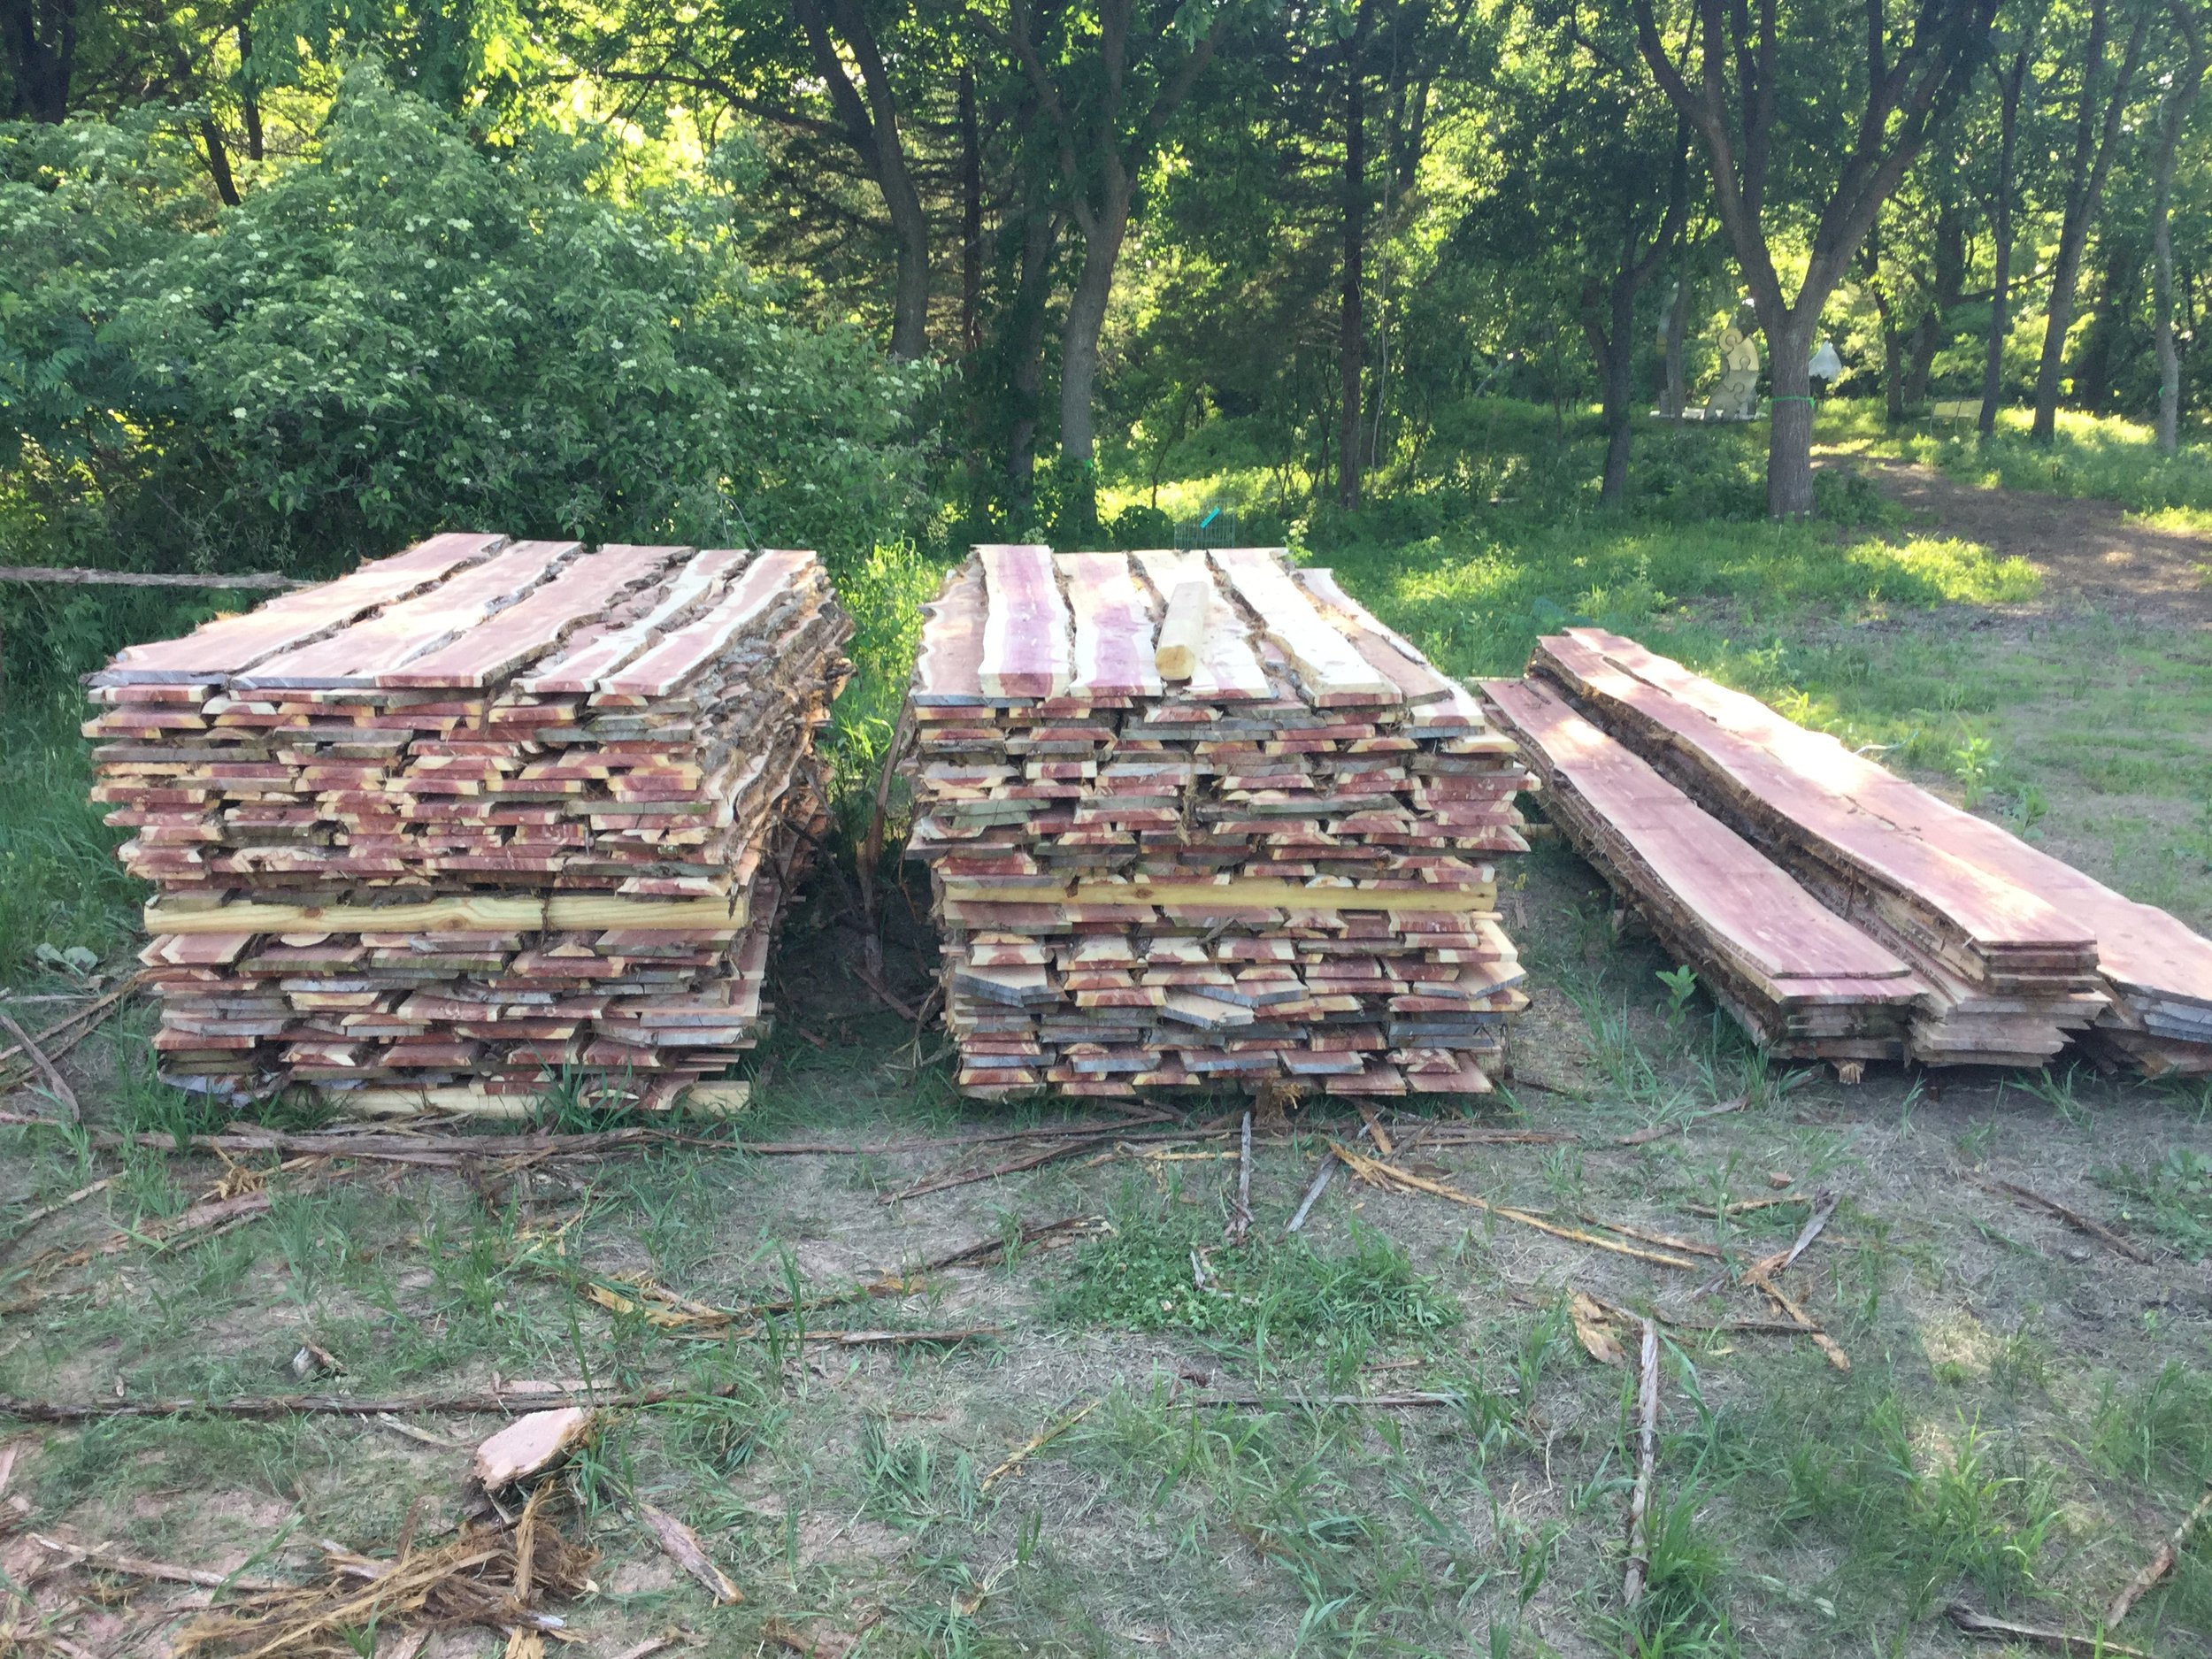 Stacks of wood